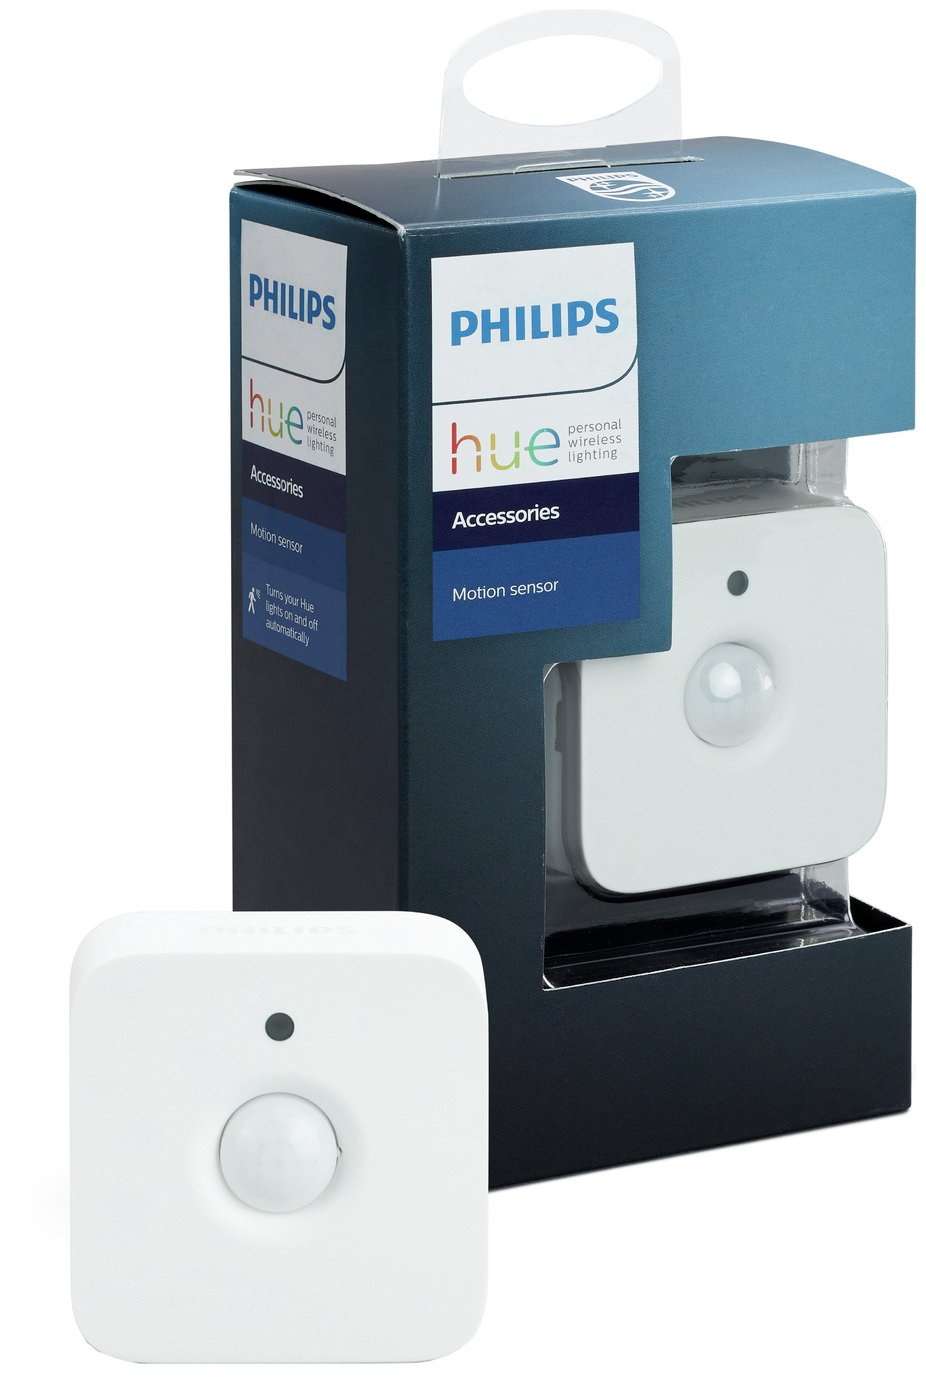 Philips Hue Motion Sensor. Review